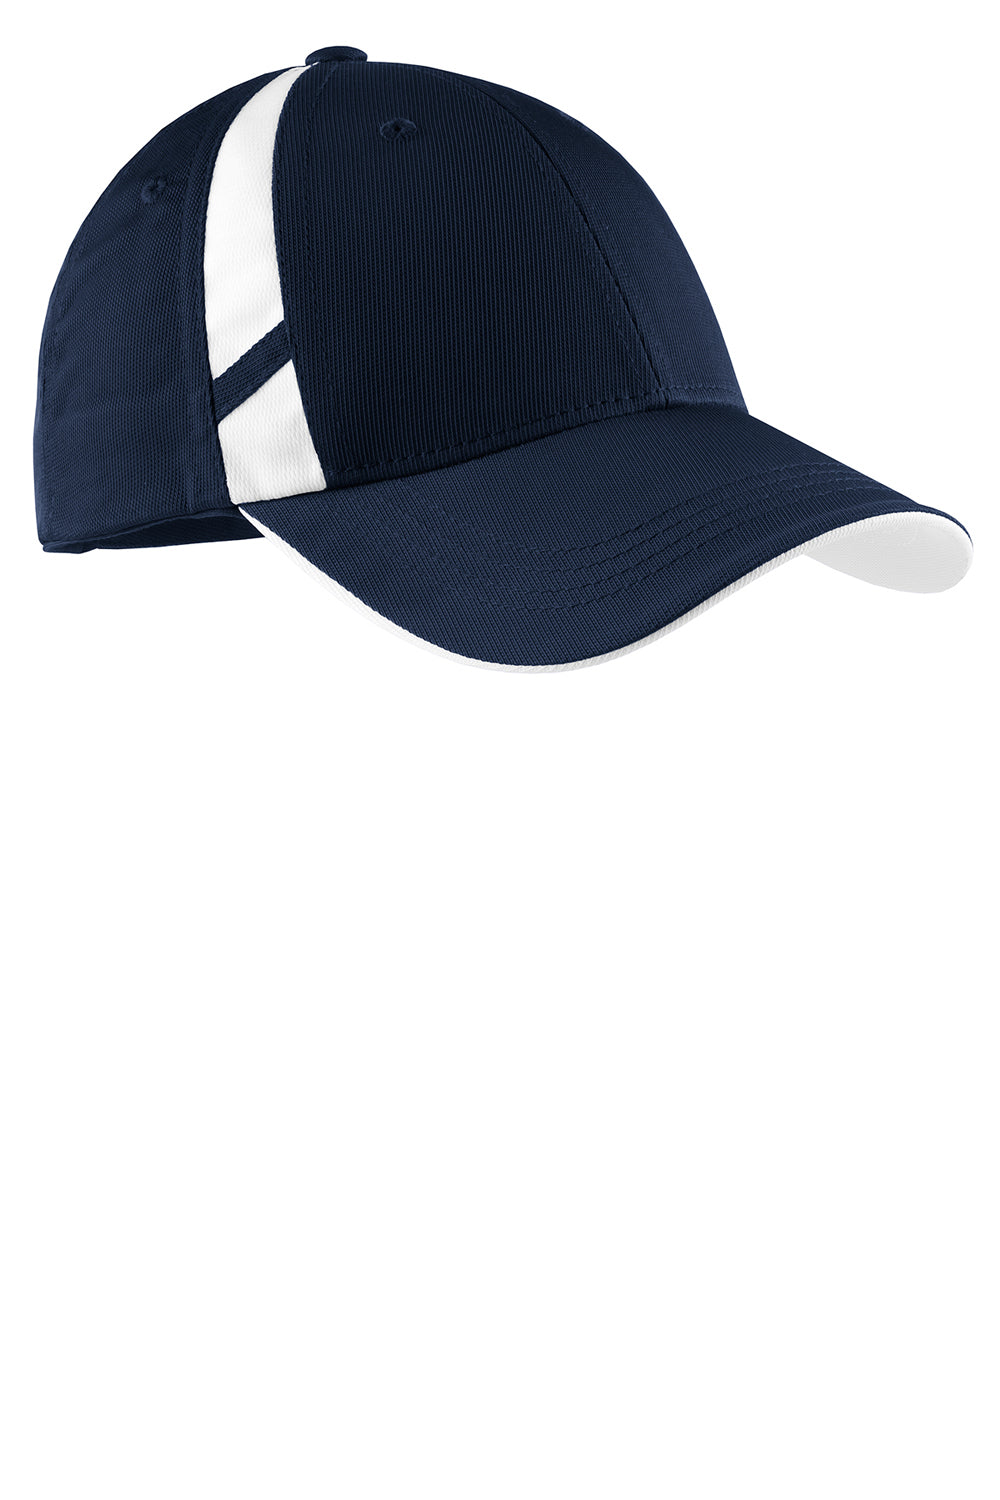 Sport-Tek STC12 Mens Dry Zone Moisture Wicking Adjustable Hat Navy Blue/White Front